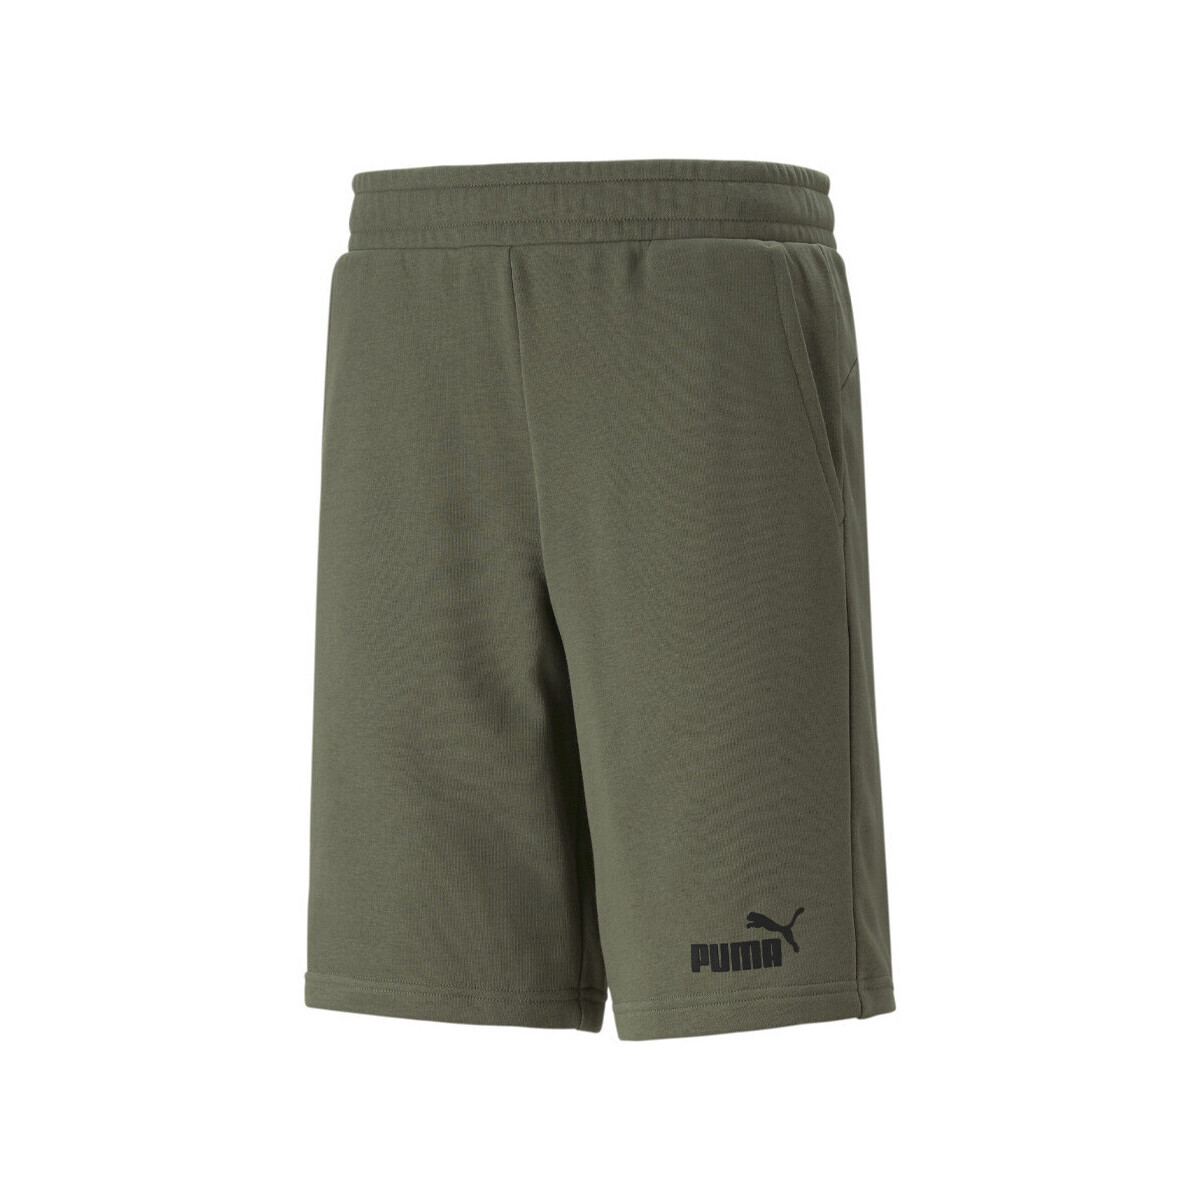 Vêtements Homme Shorts / Bermudas Puma 586710-36 Vert